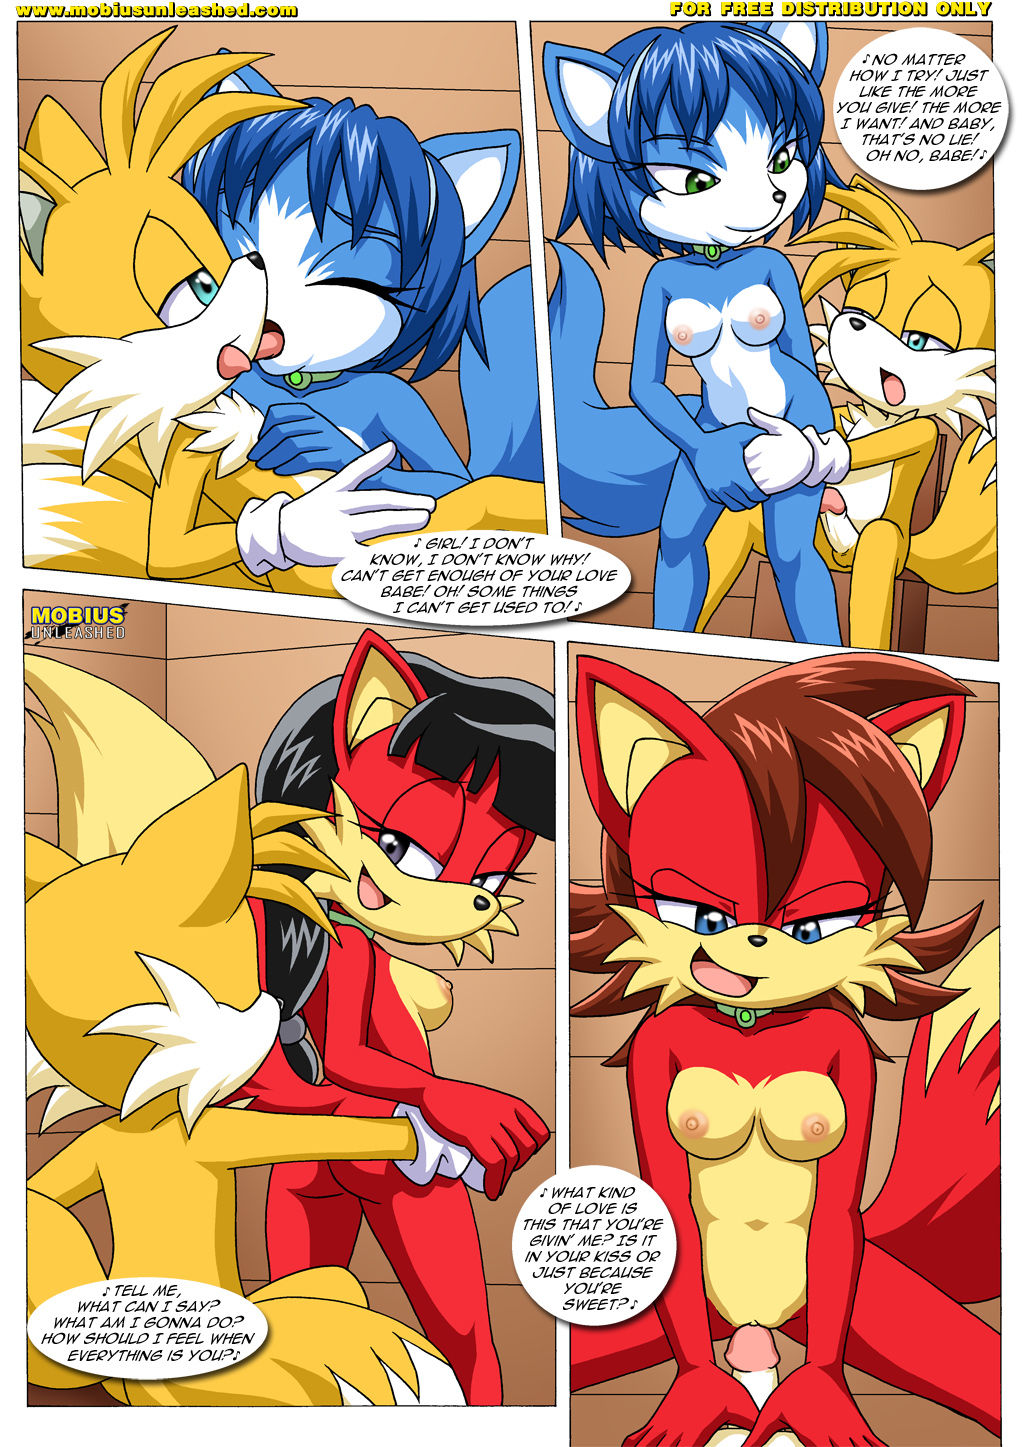 [Palcomix] FoXXXes (Sonic the Hedgehog, Star Fox) 